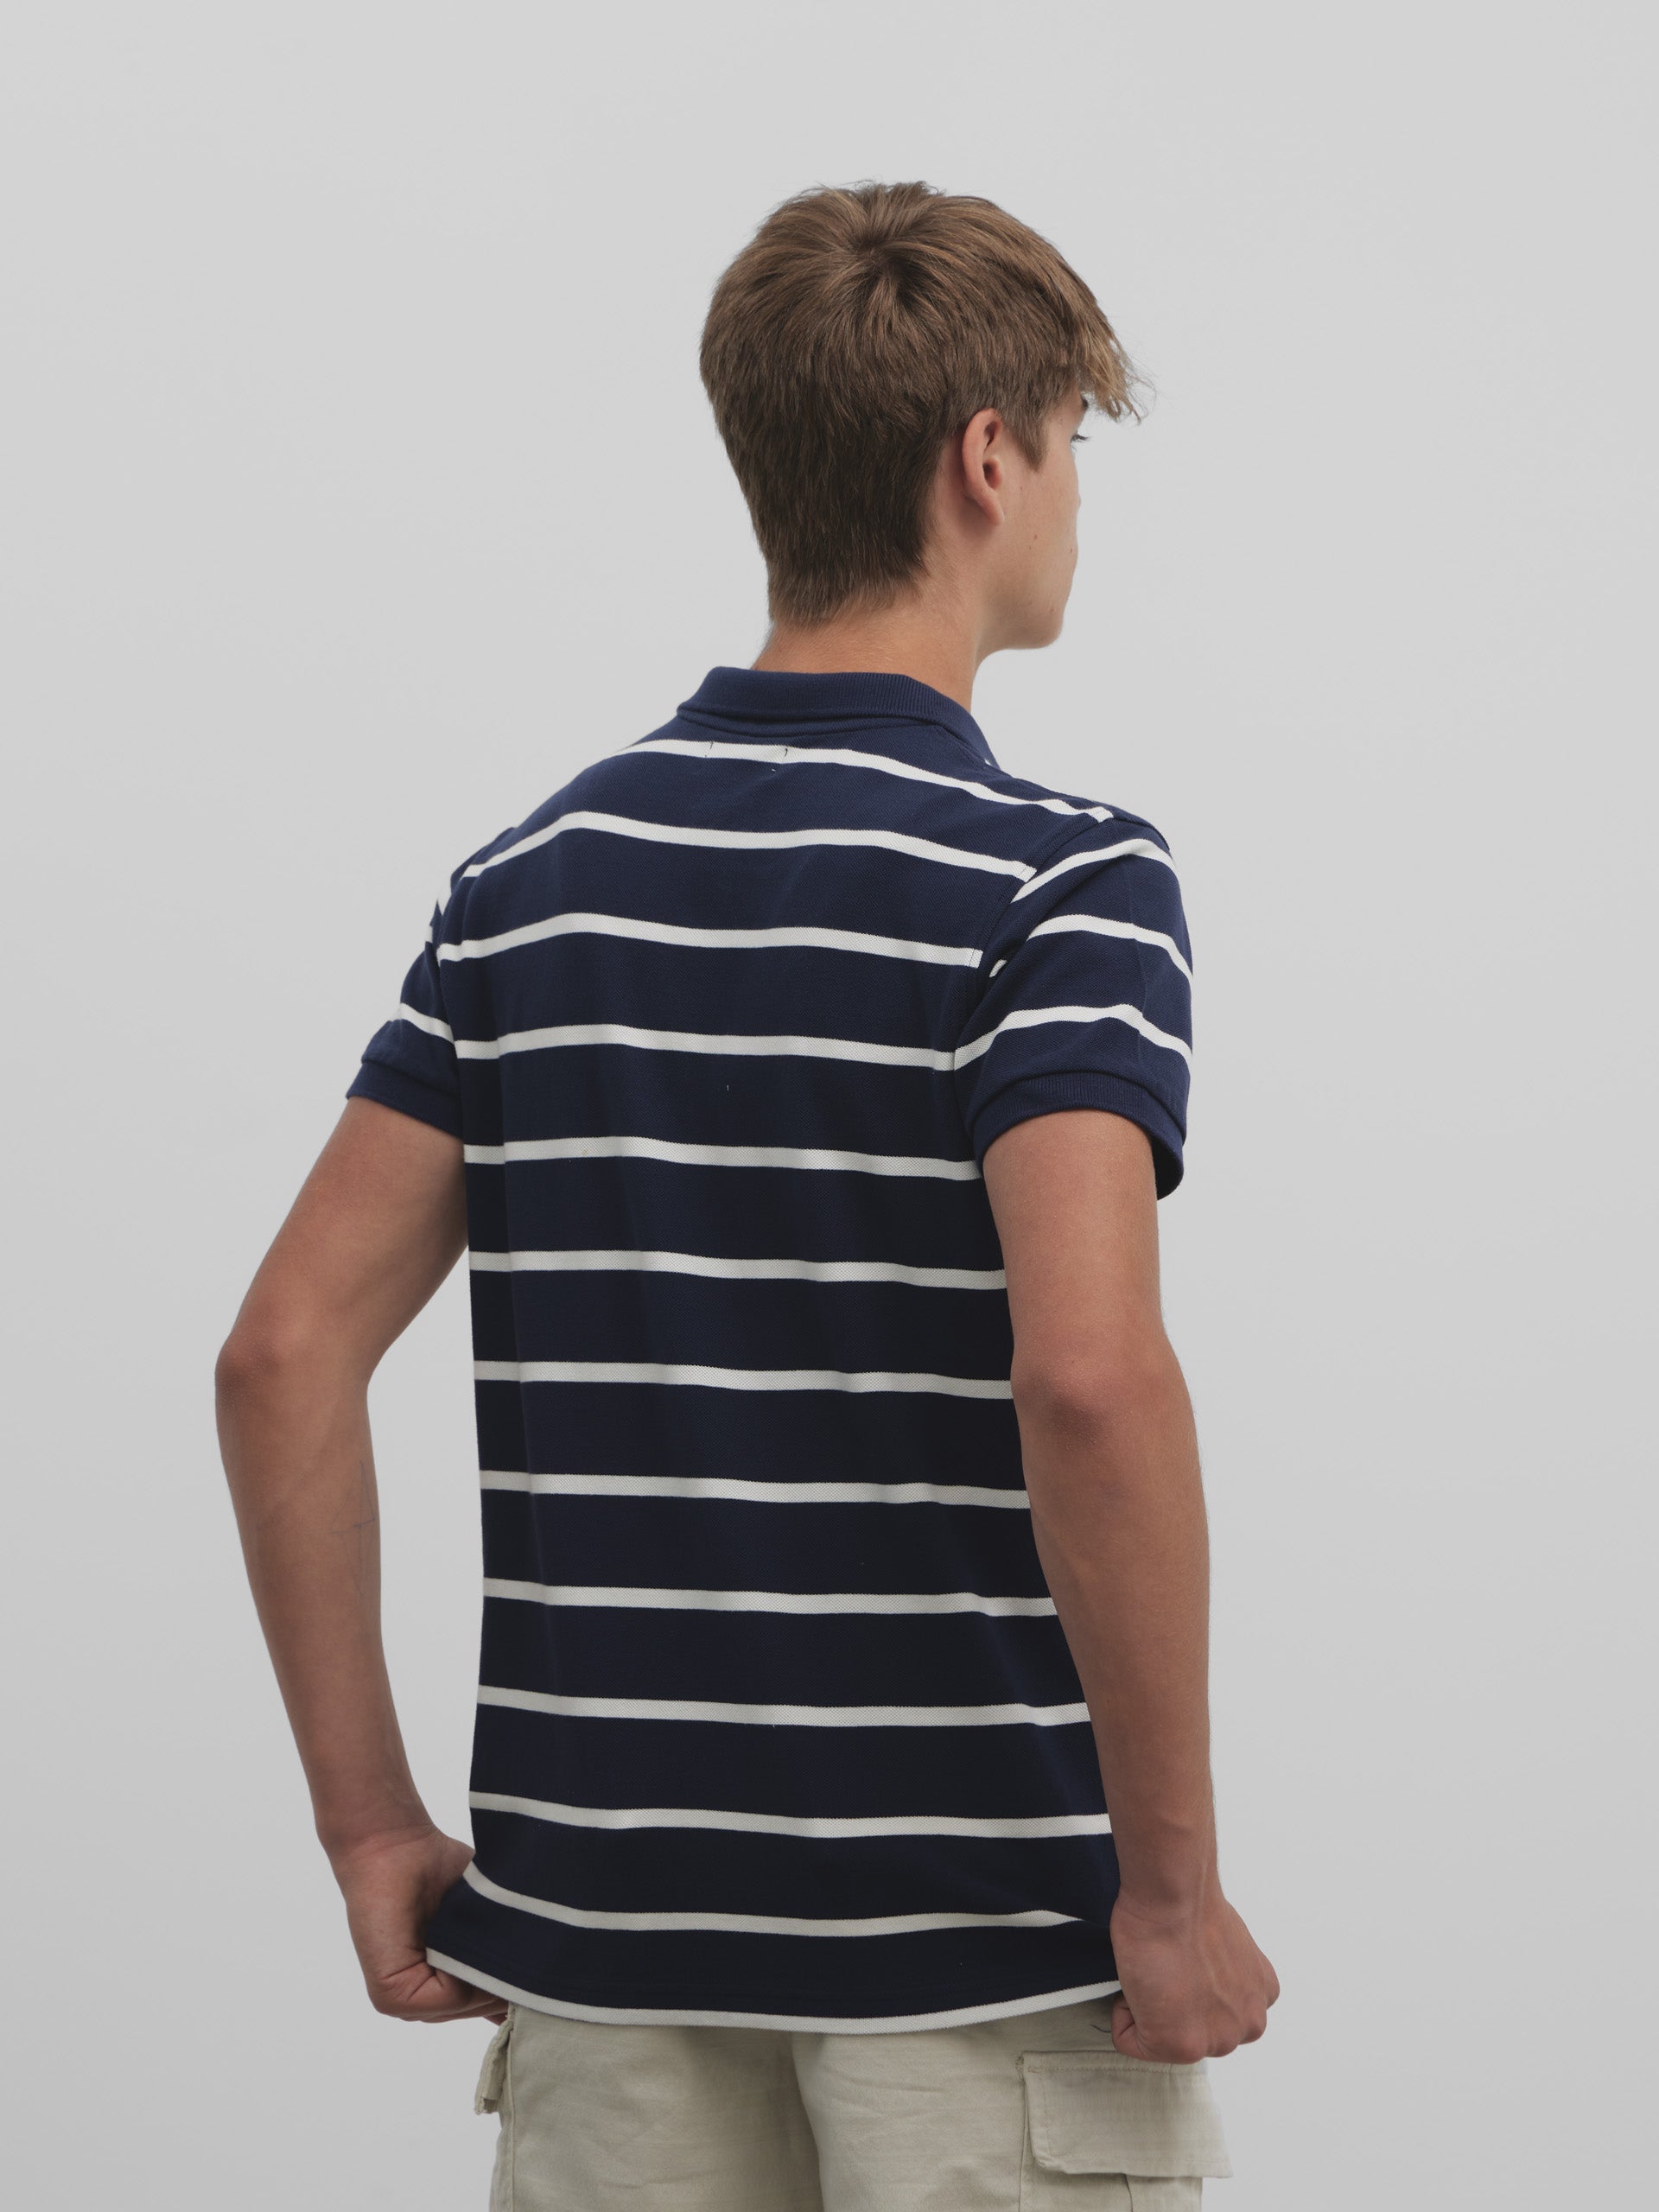 Classic navy blue nautical stripe polo shirt